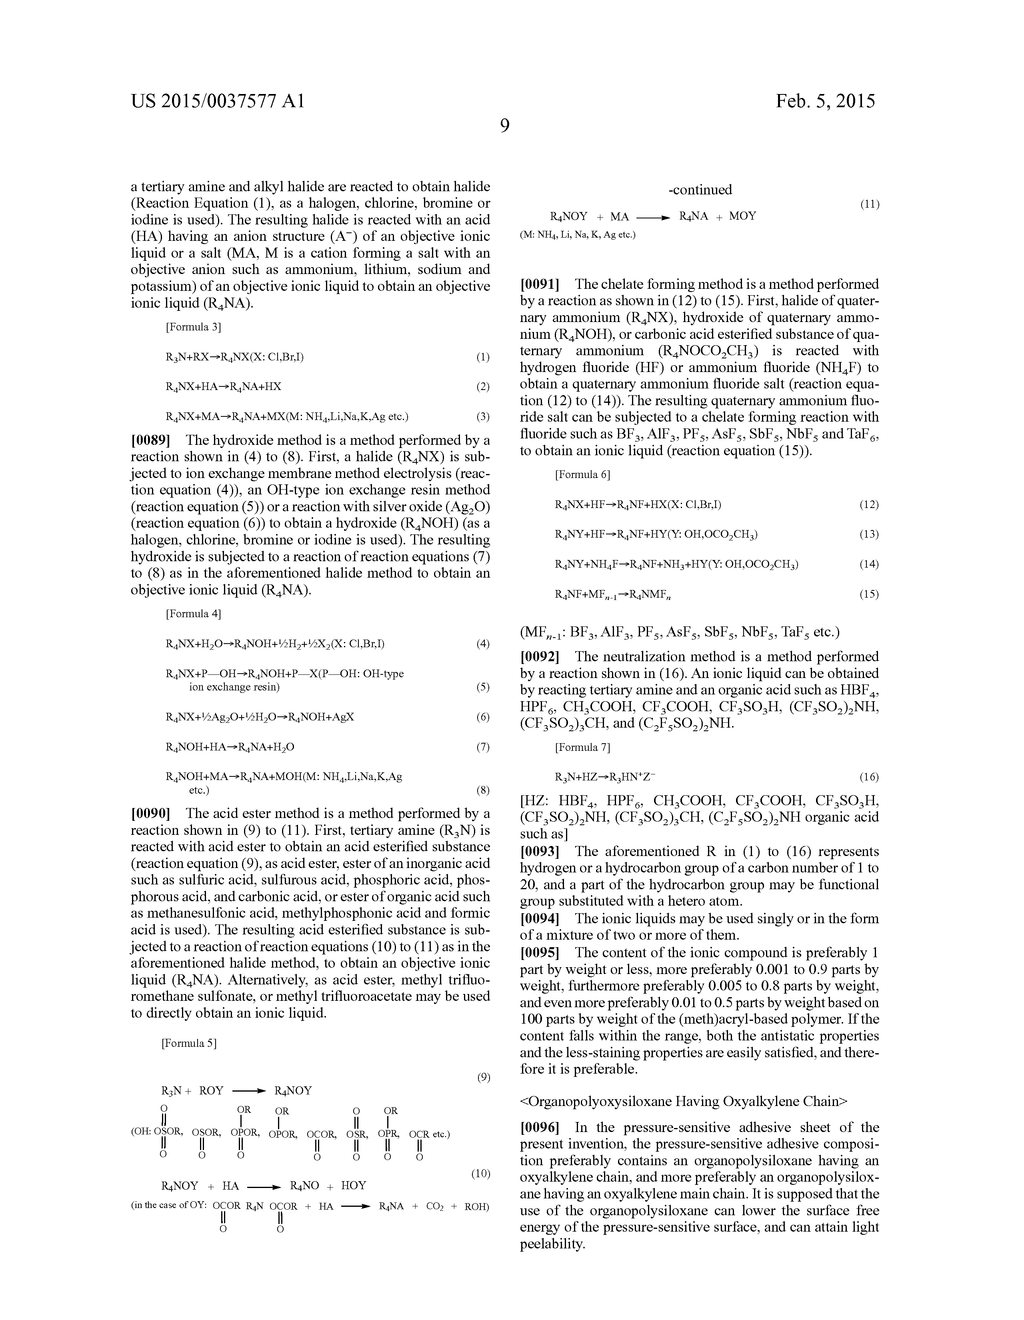 PRESSURE-SENSITIVE ADHESIVE SHEET AND OPTICAL MEMBER - diagram, schematic, and image 12